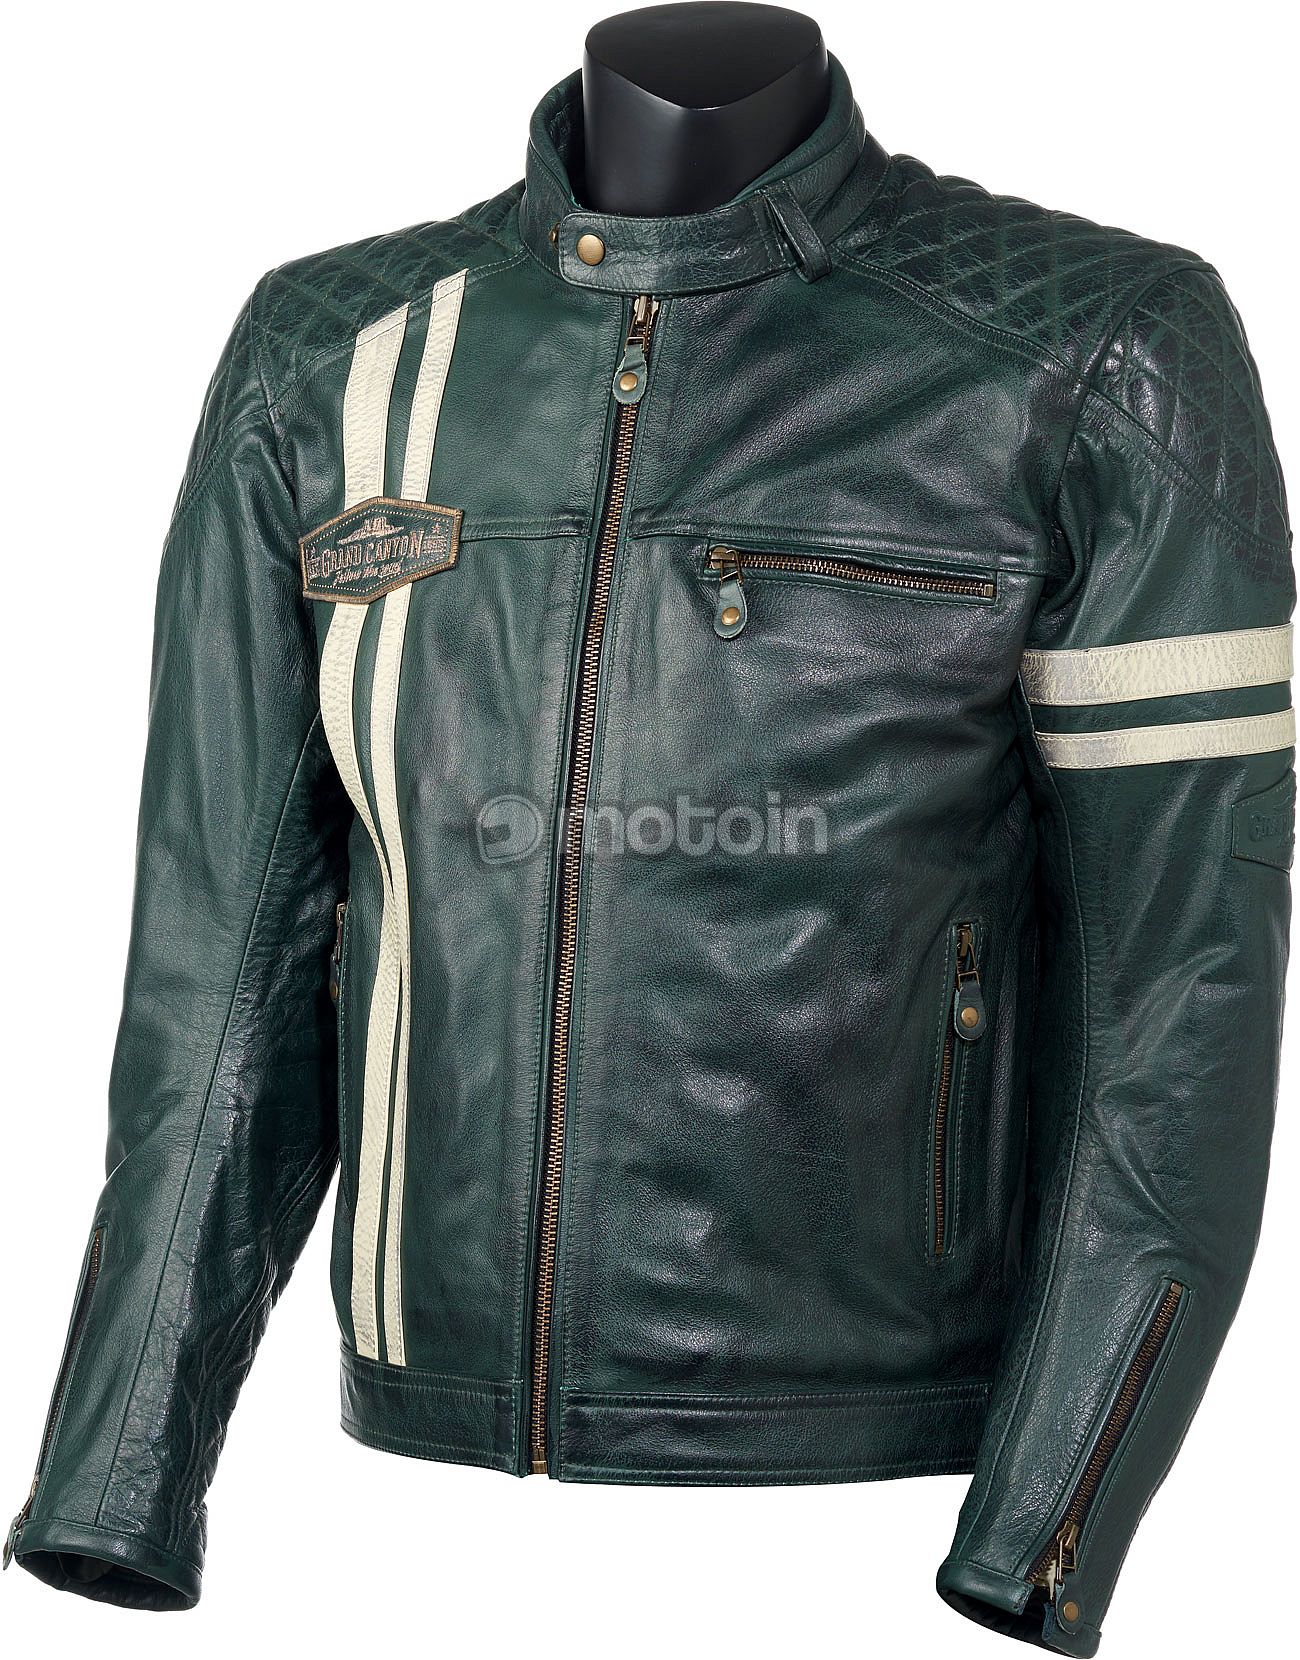 GC Bikewear Kirk, chaqueta de cuero